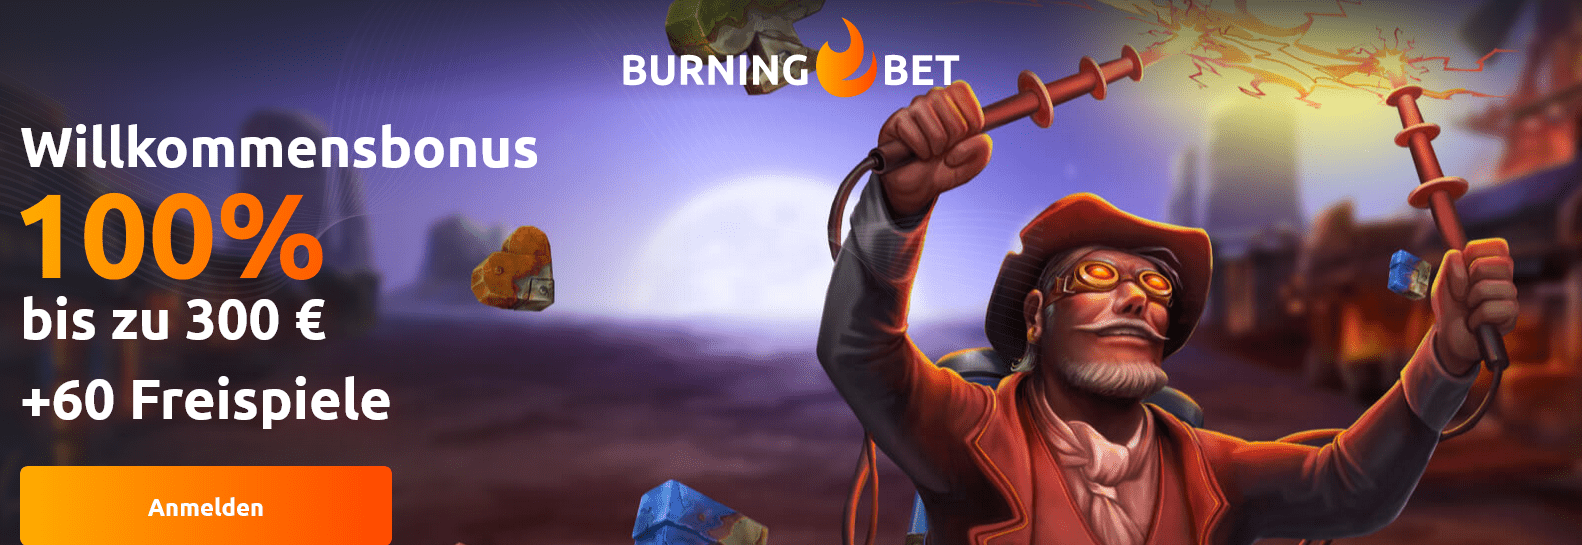 Burningbet Bonus Code